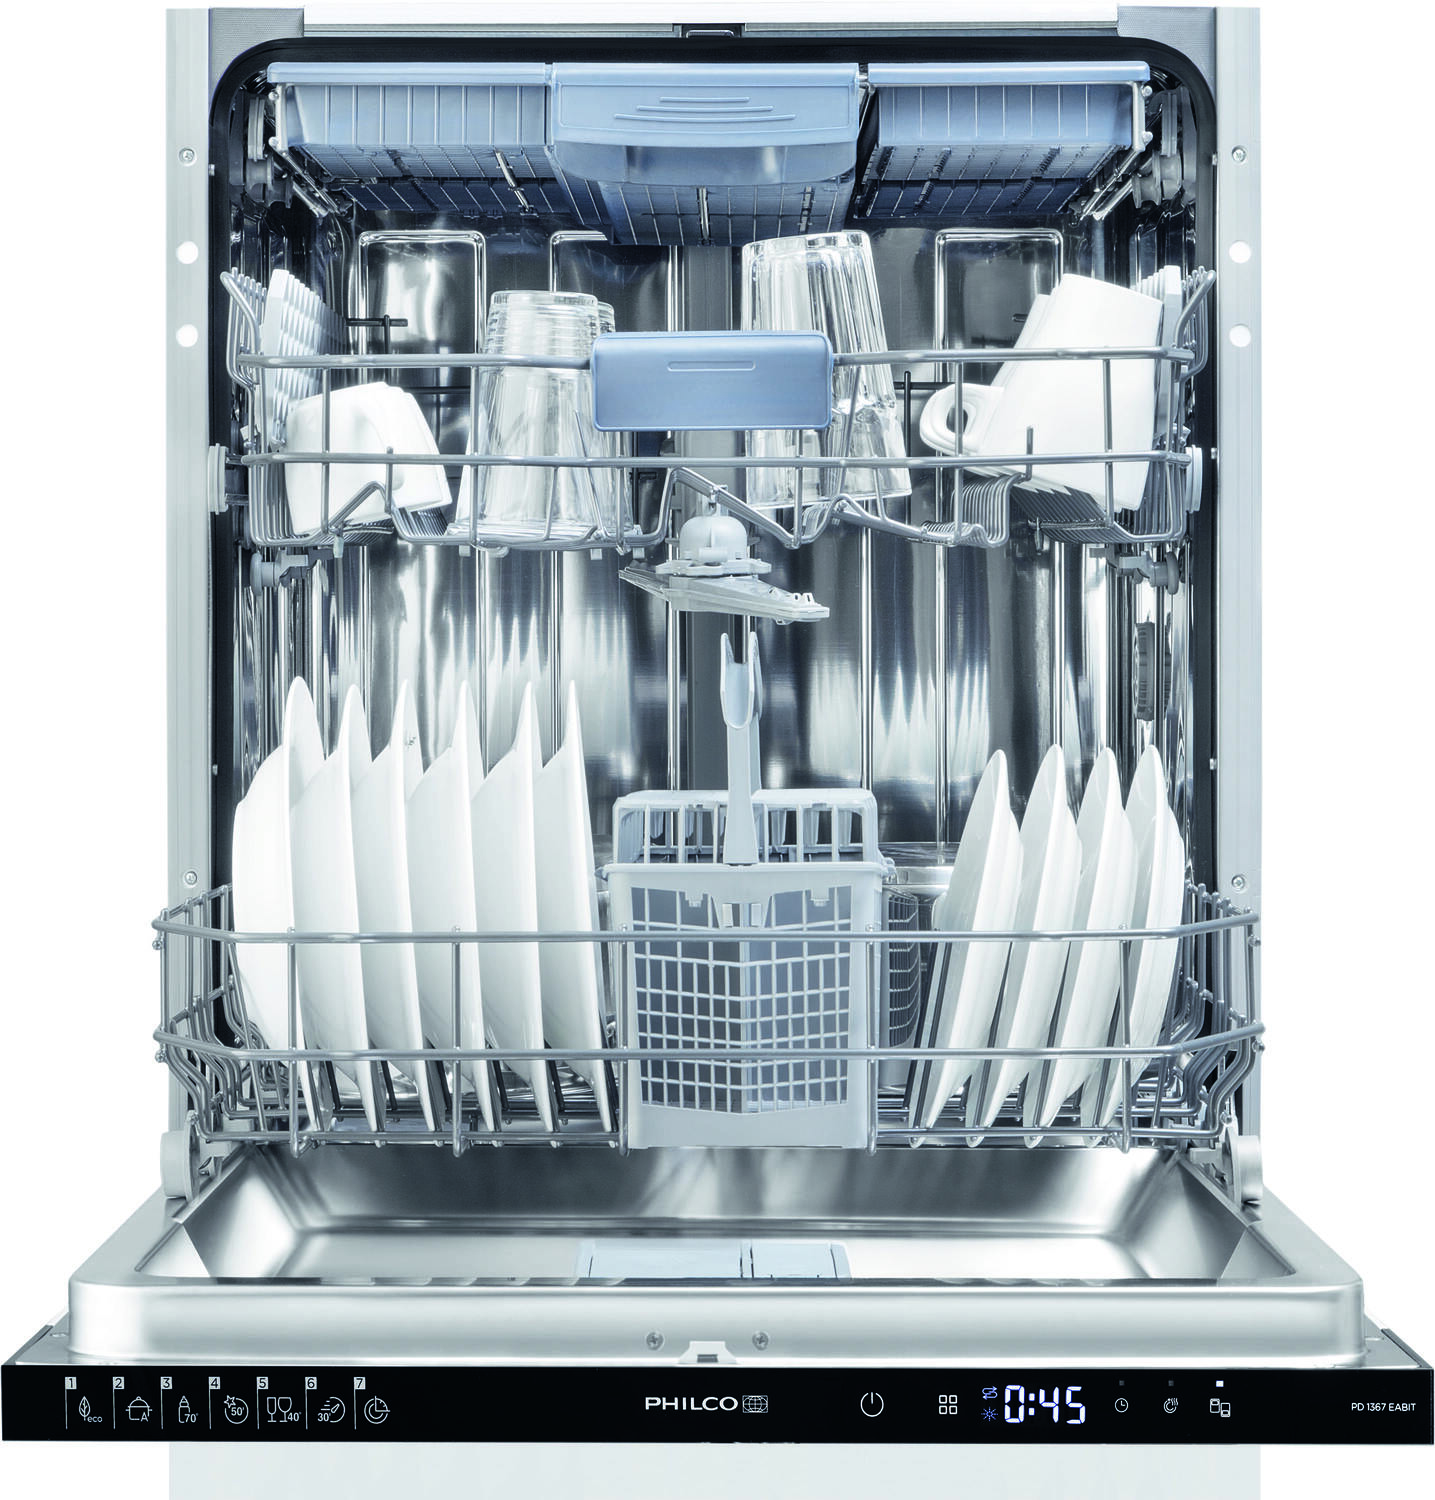 Philco open dishwasher